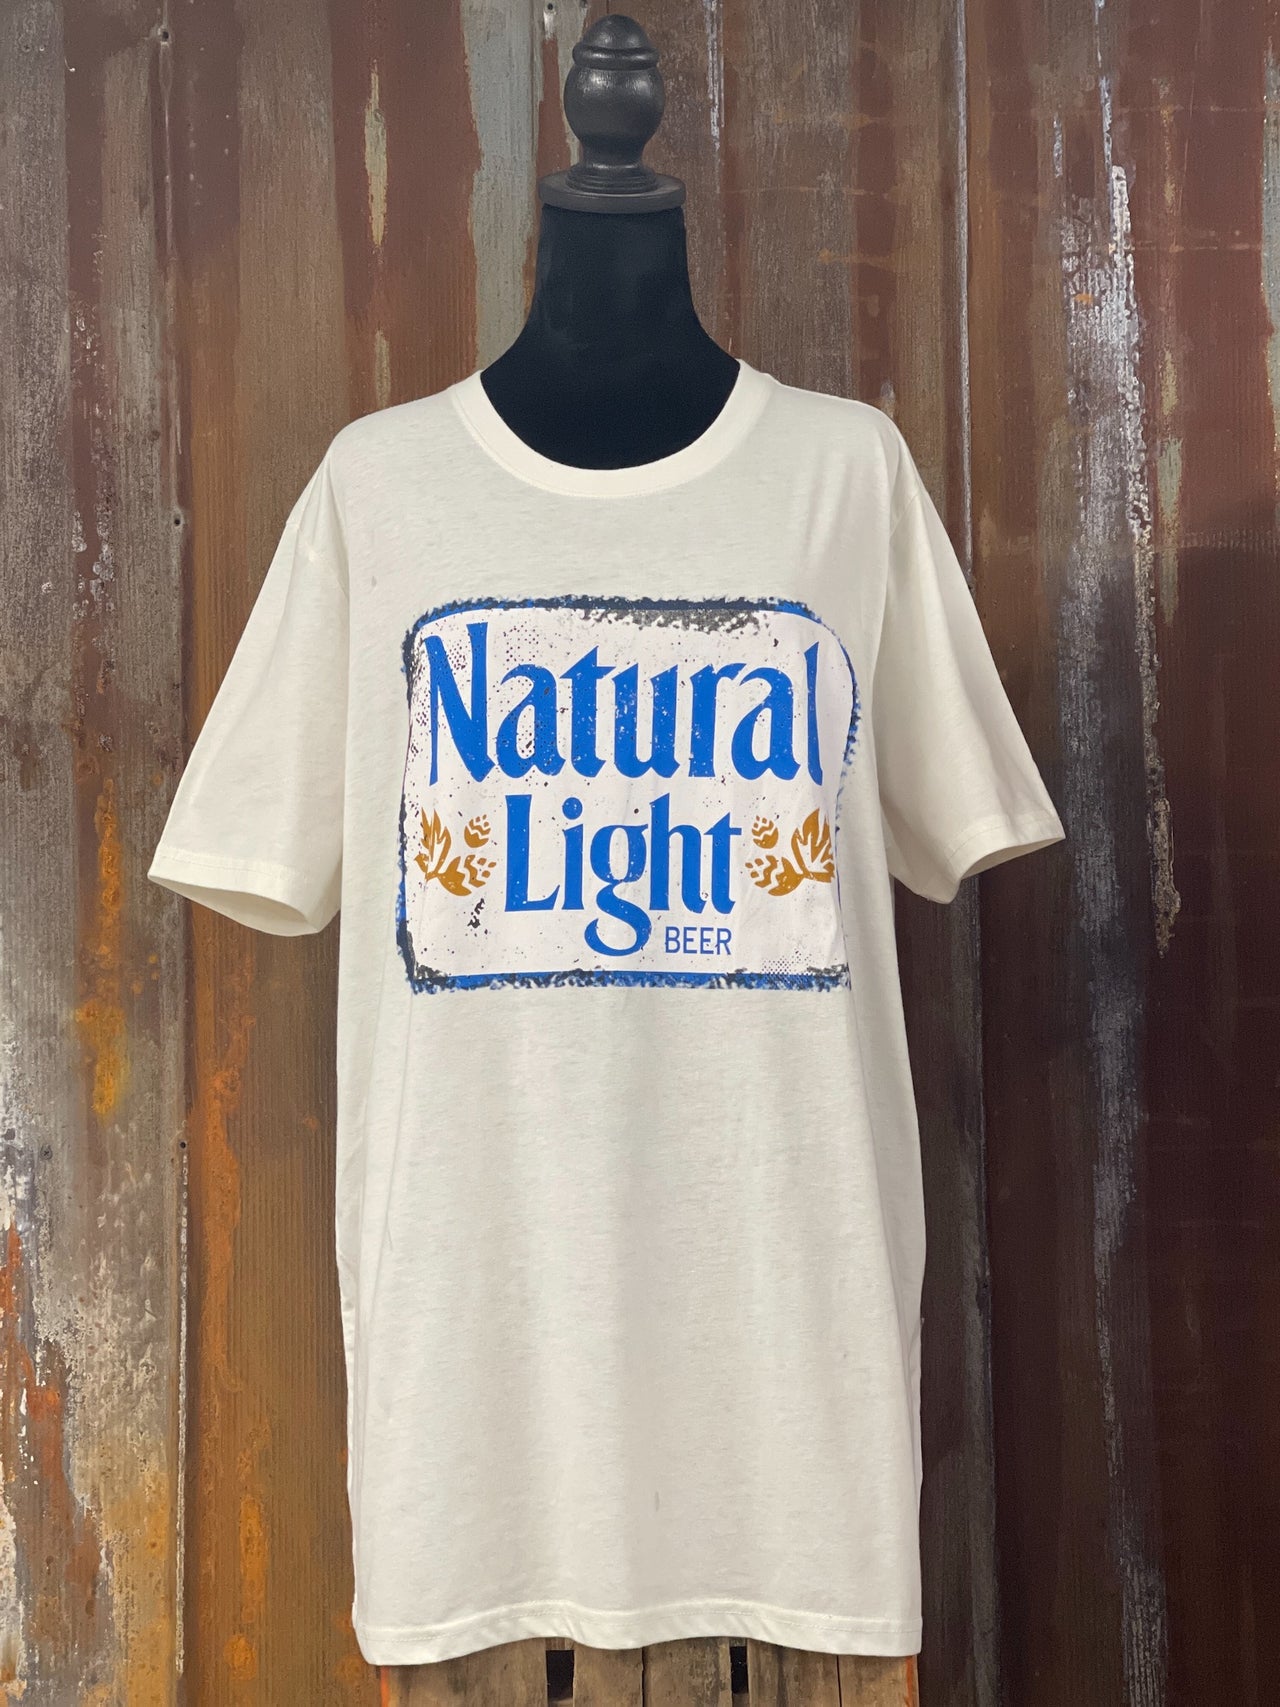 Natural Light Beer T-shirt